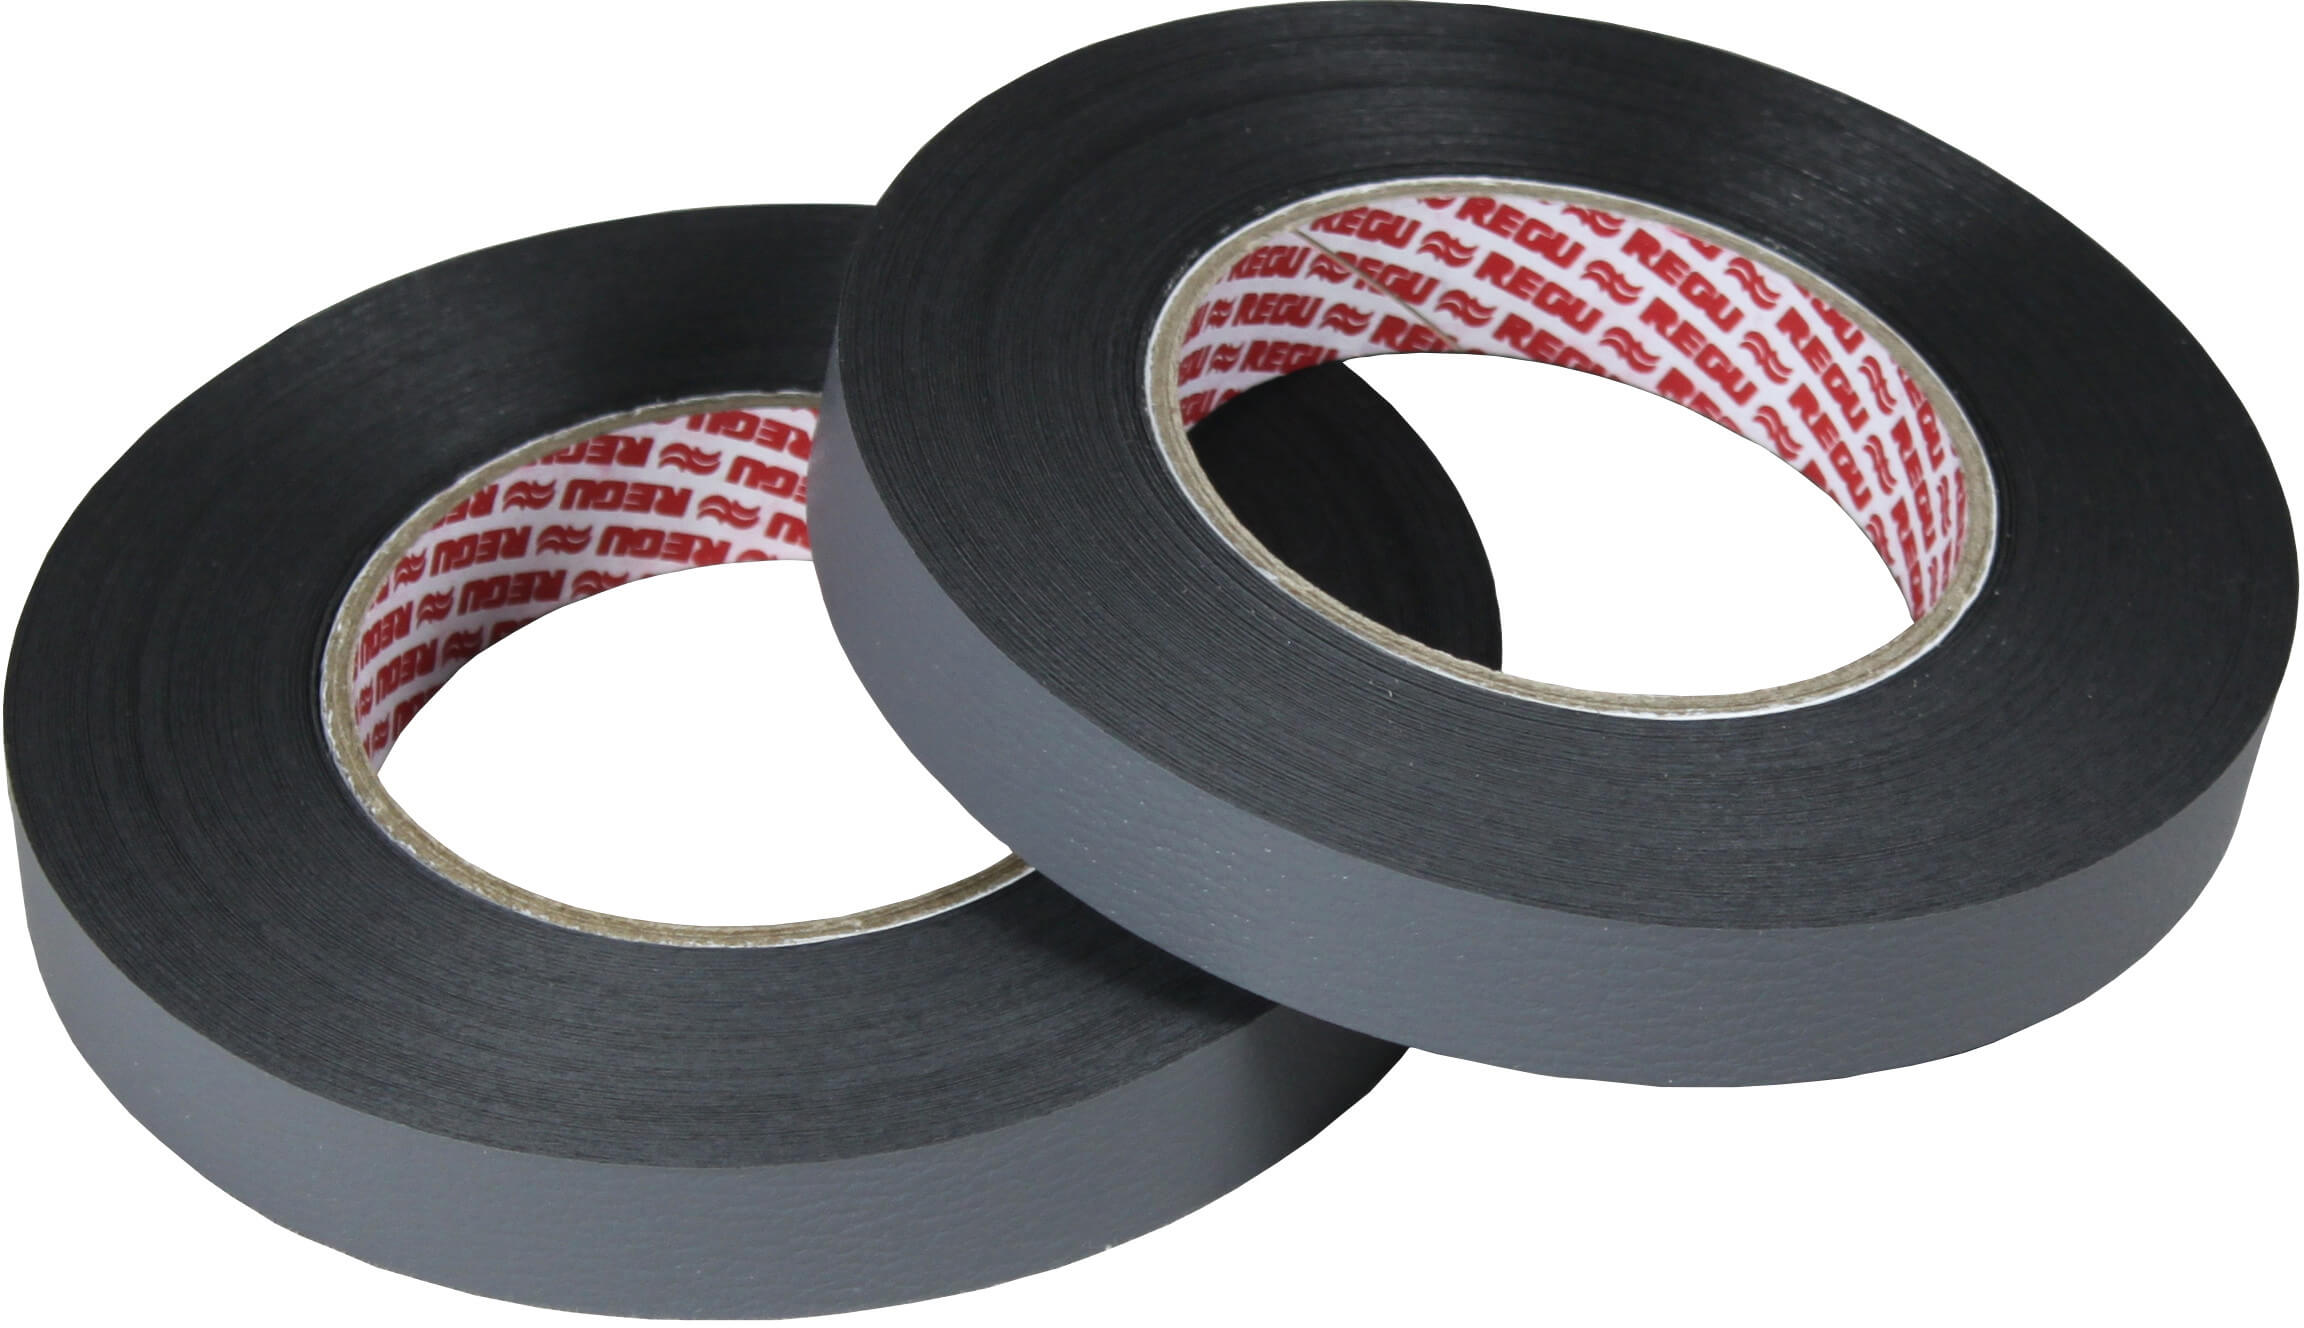 Reguflex Papierband in Lederstruktur, 19 mm, 50m grau | Bestnr. REGUFLEX19-GRA